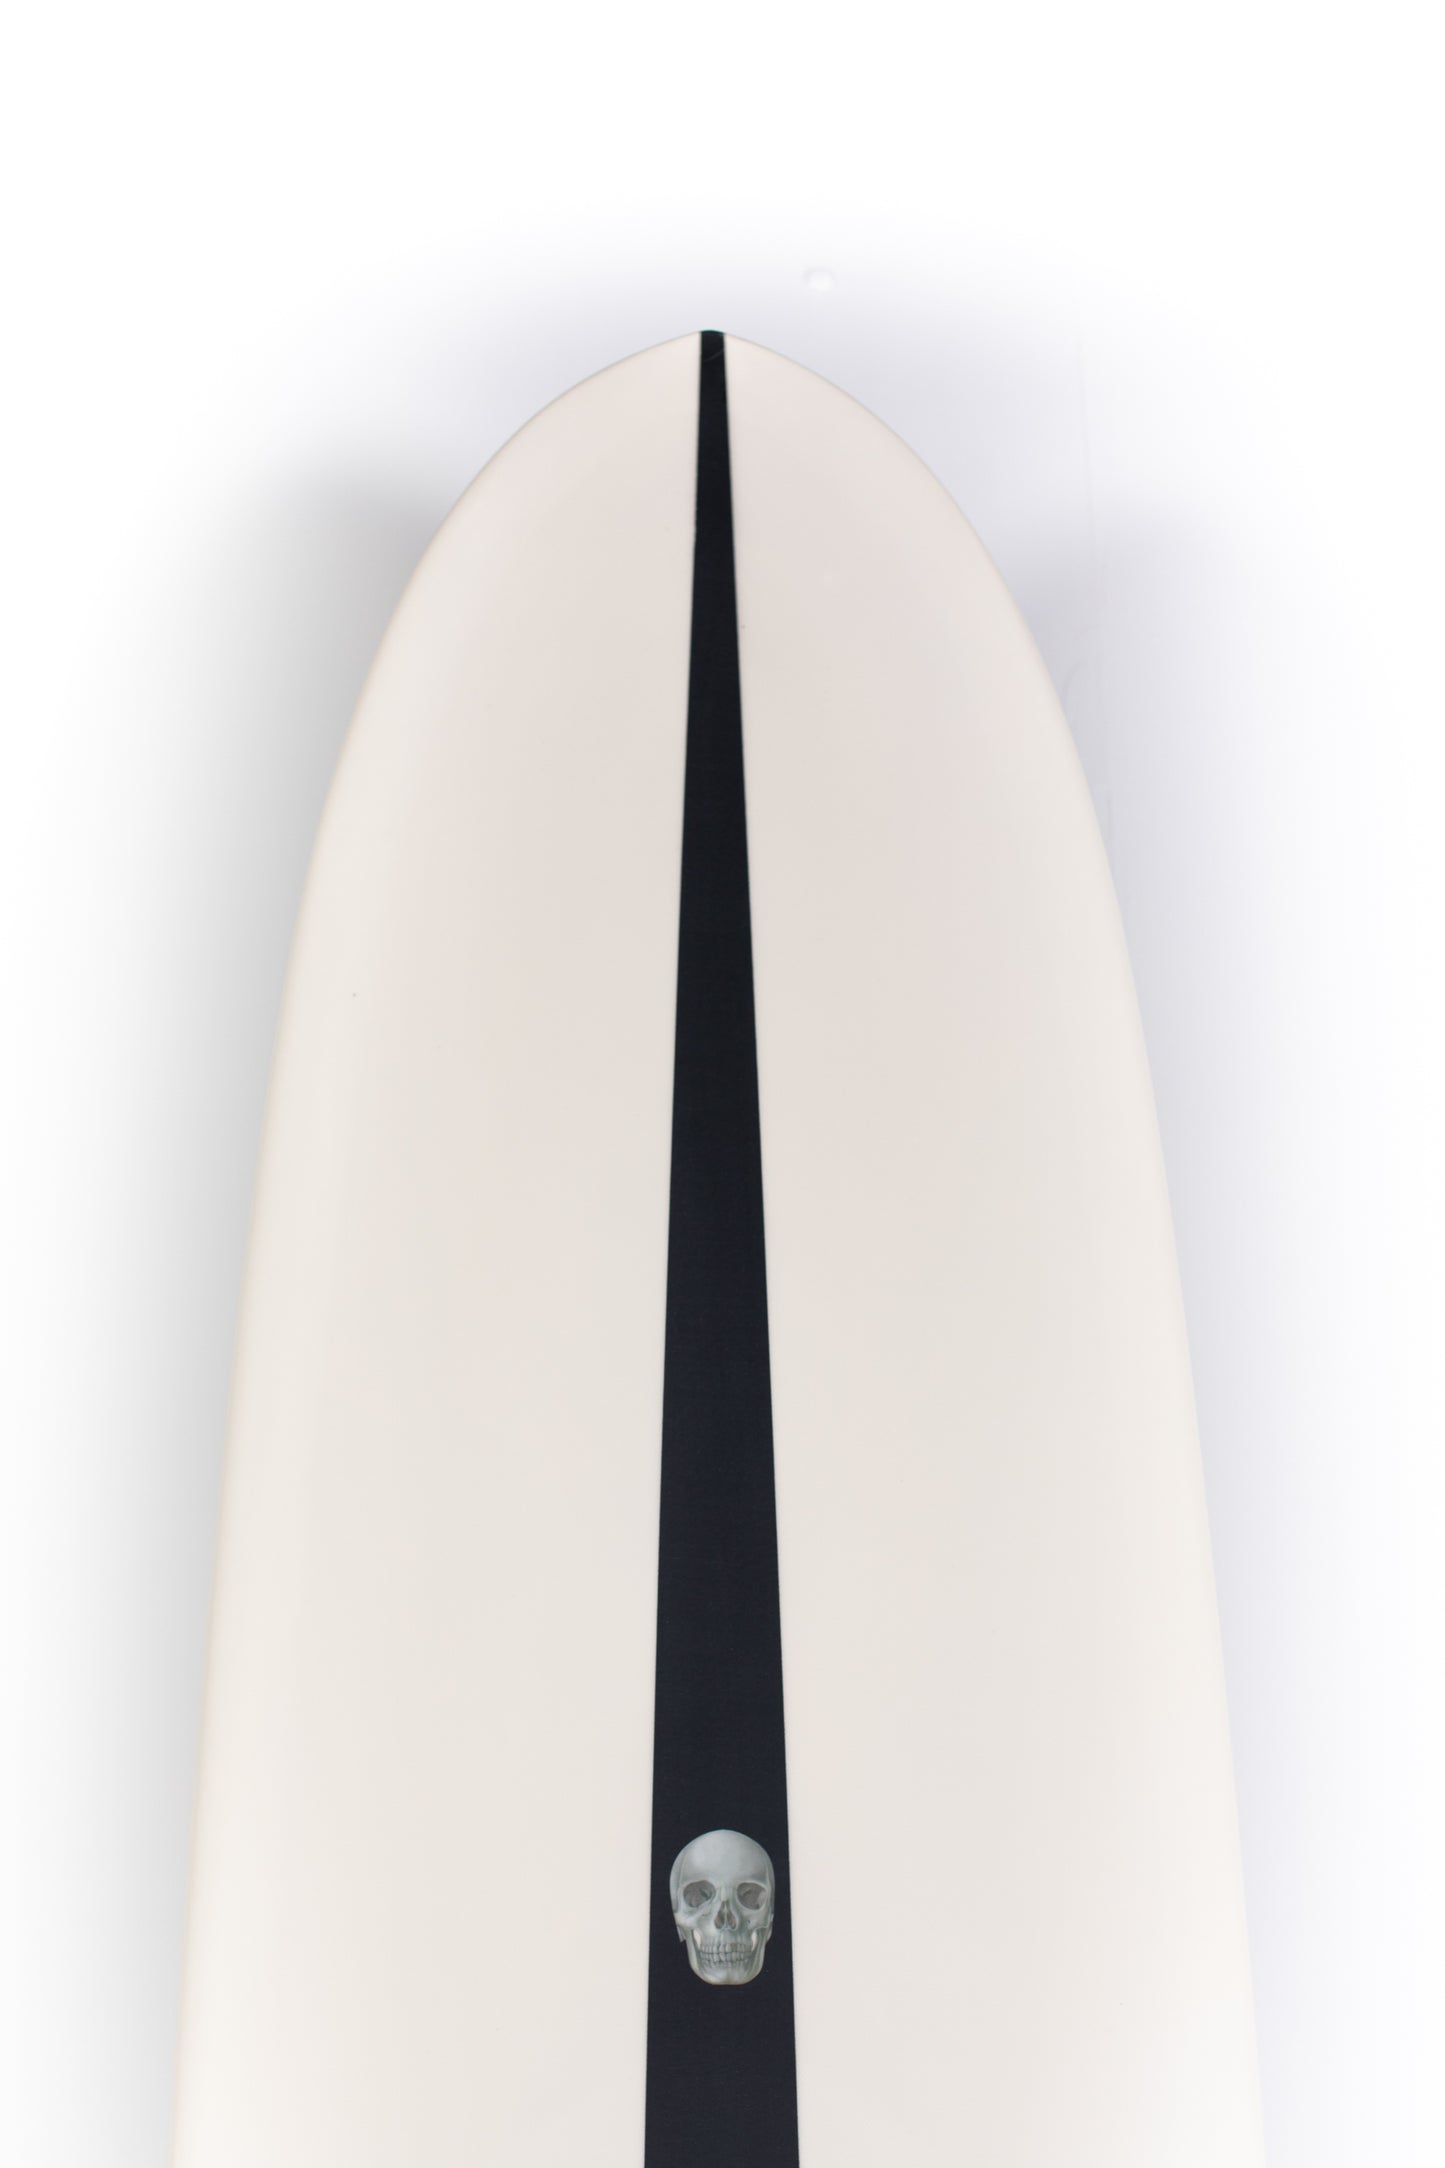 
                  
                    Pukas Surf Shop - Christenson Surfboard  - TRADESMAN by Chris Christenson - 9'4” x 23 1/8 x 2 13/16 - CX05454
                  
                